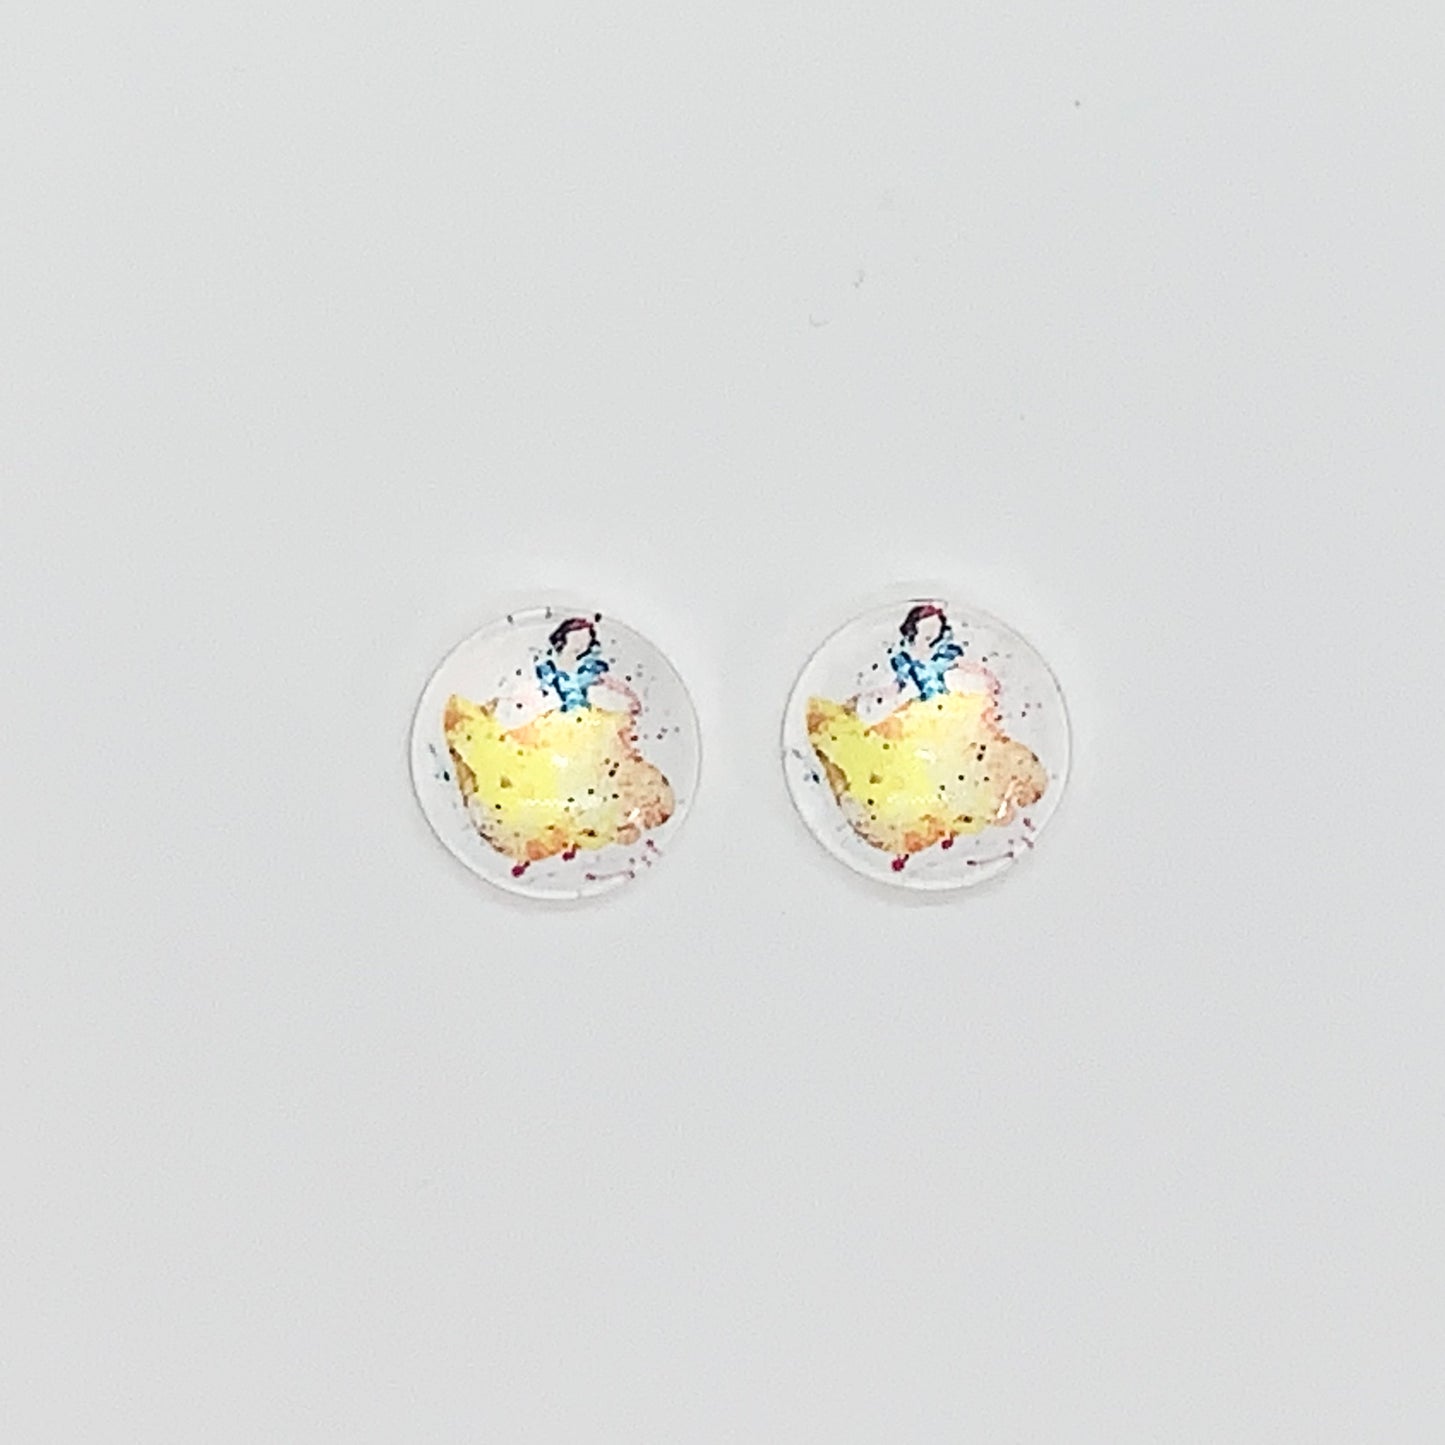 Watercolour Disney Princess Character Earrings | Amilya's Boutique